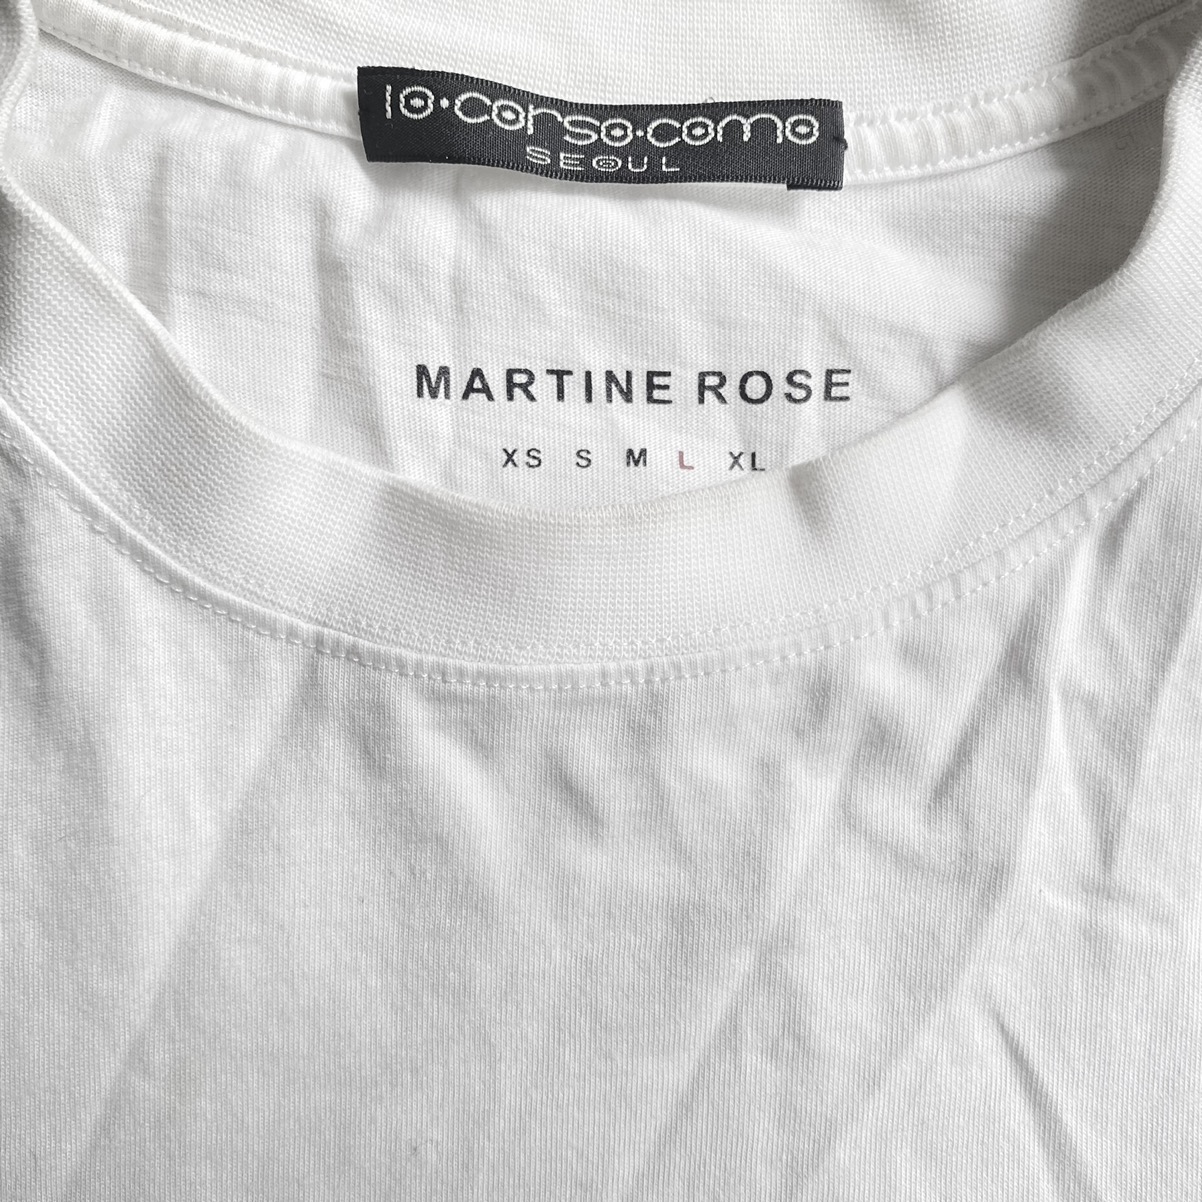 Martine Rose Mens Logo T shirt XS White Black 09-91 Autumn & Winter  Collection